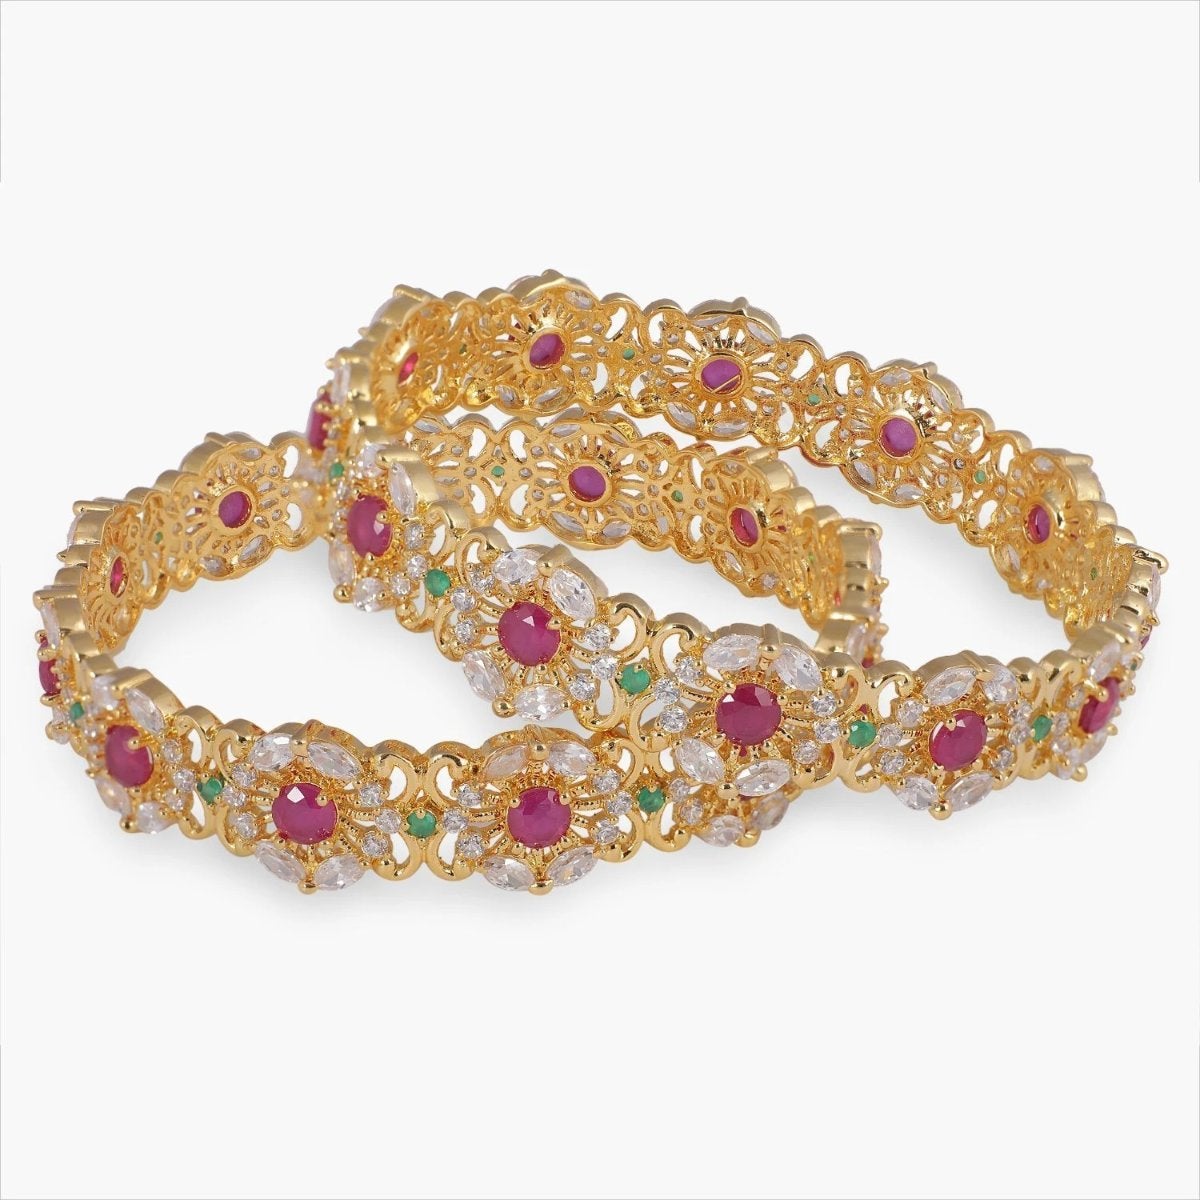 Buy quality Butterfly rose gold bracelet in 18kt in Pune